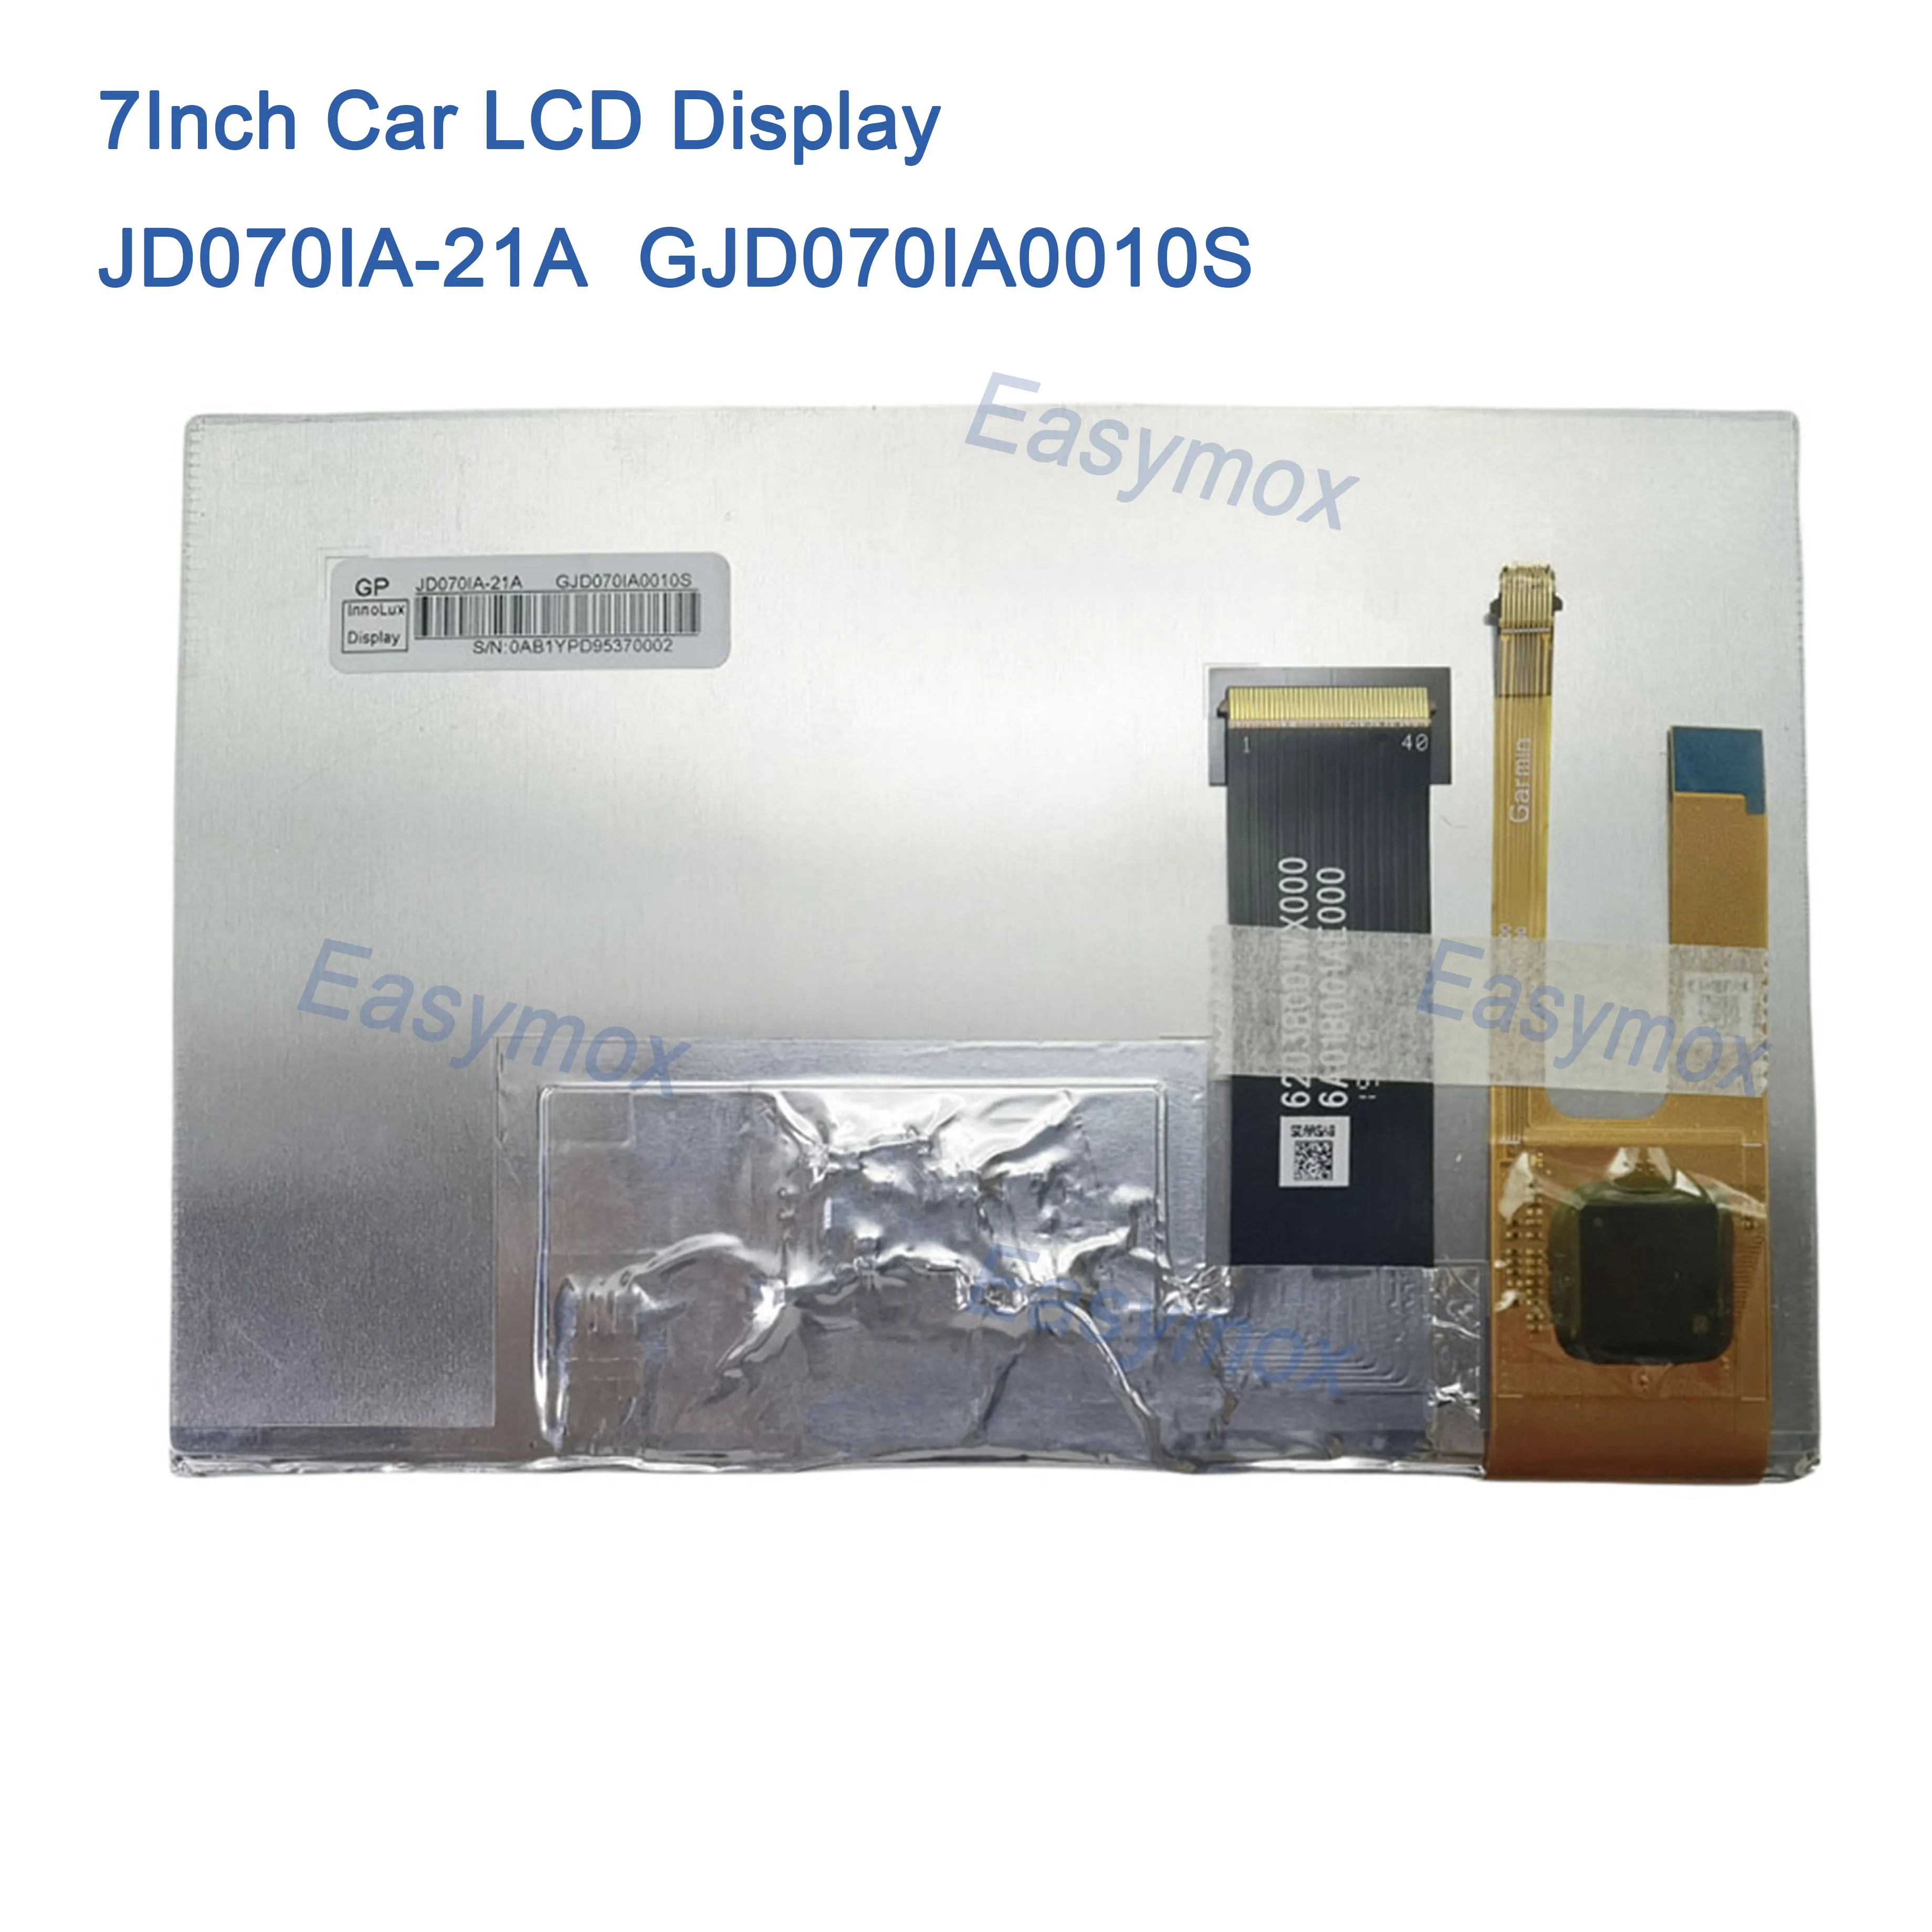 

JD070IA-21A GJD070IA0010S 7inch Original Car LCD Display Navigation GPS Center Control Screen Repairment